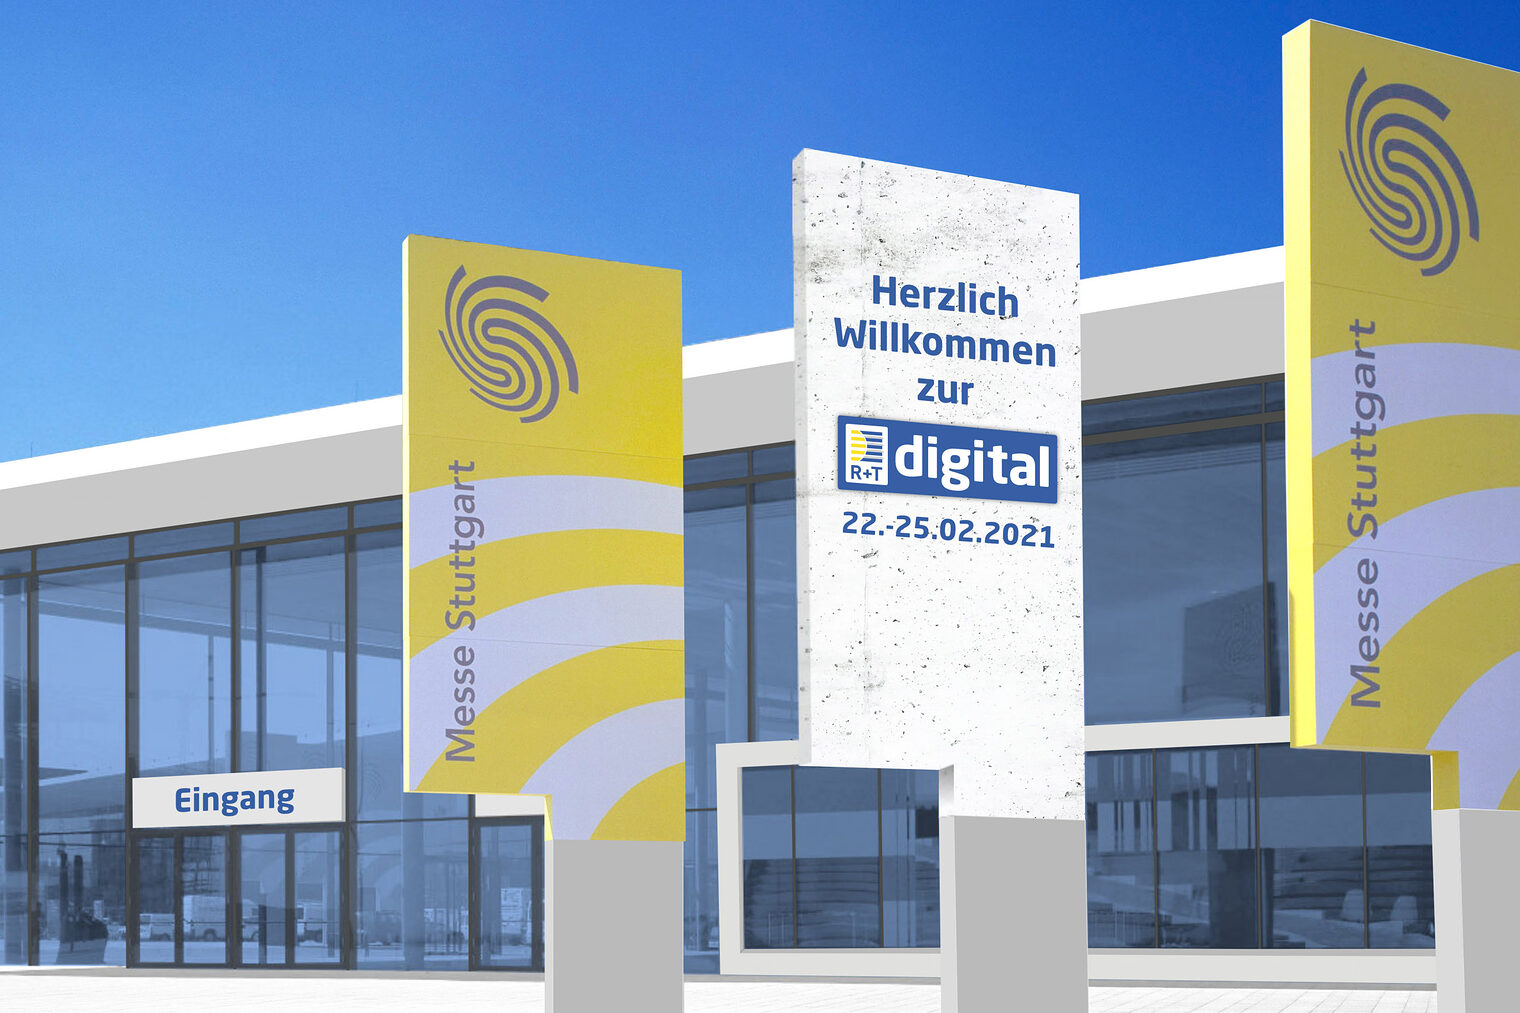 r+d digital messe enterprise europe network baden württemberg